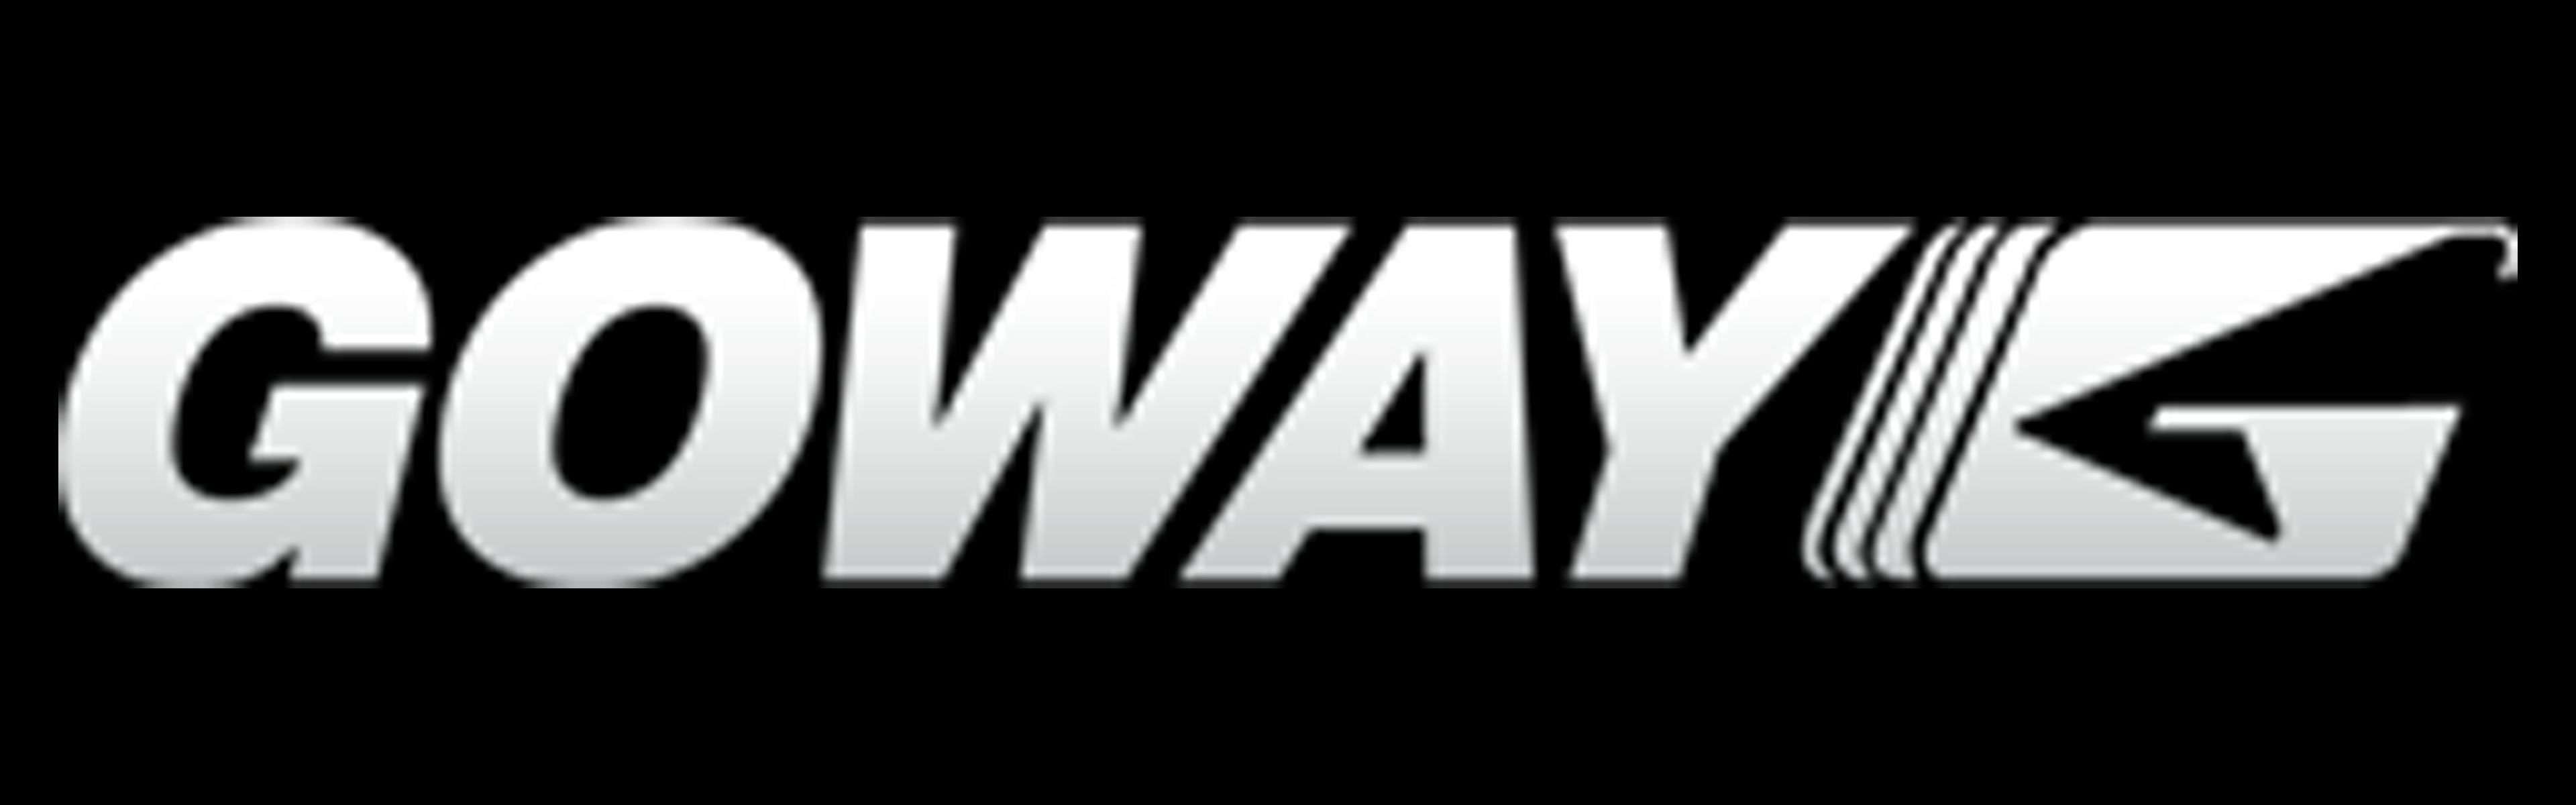 Goway Logo